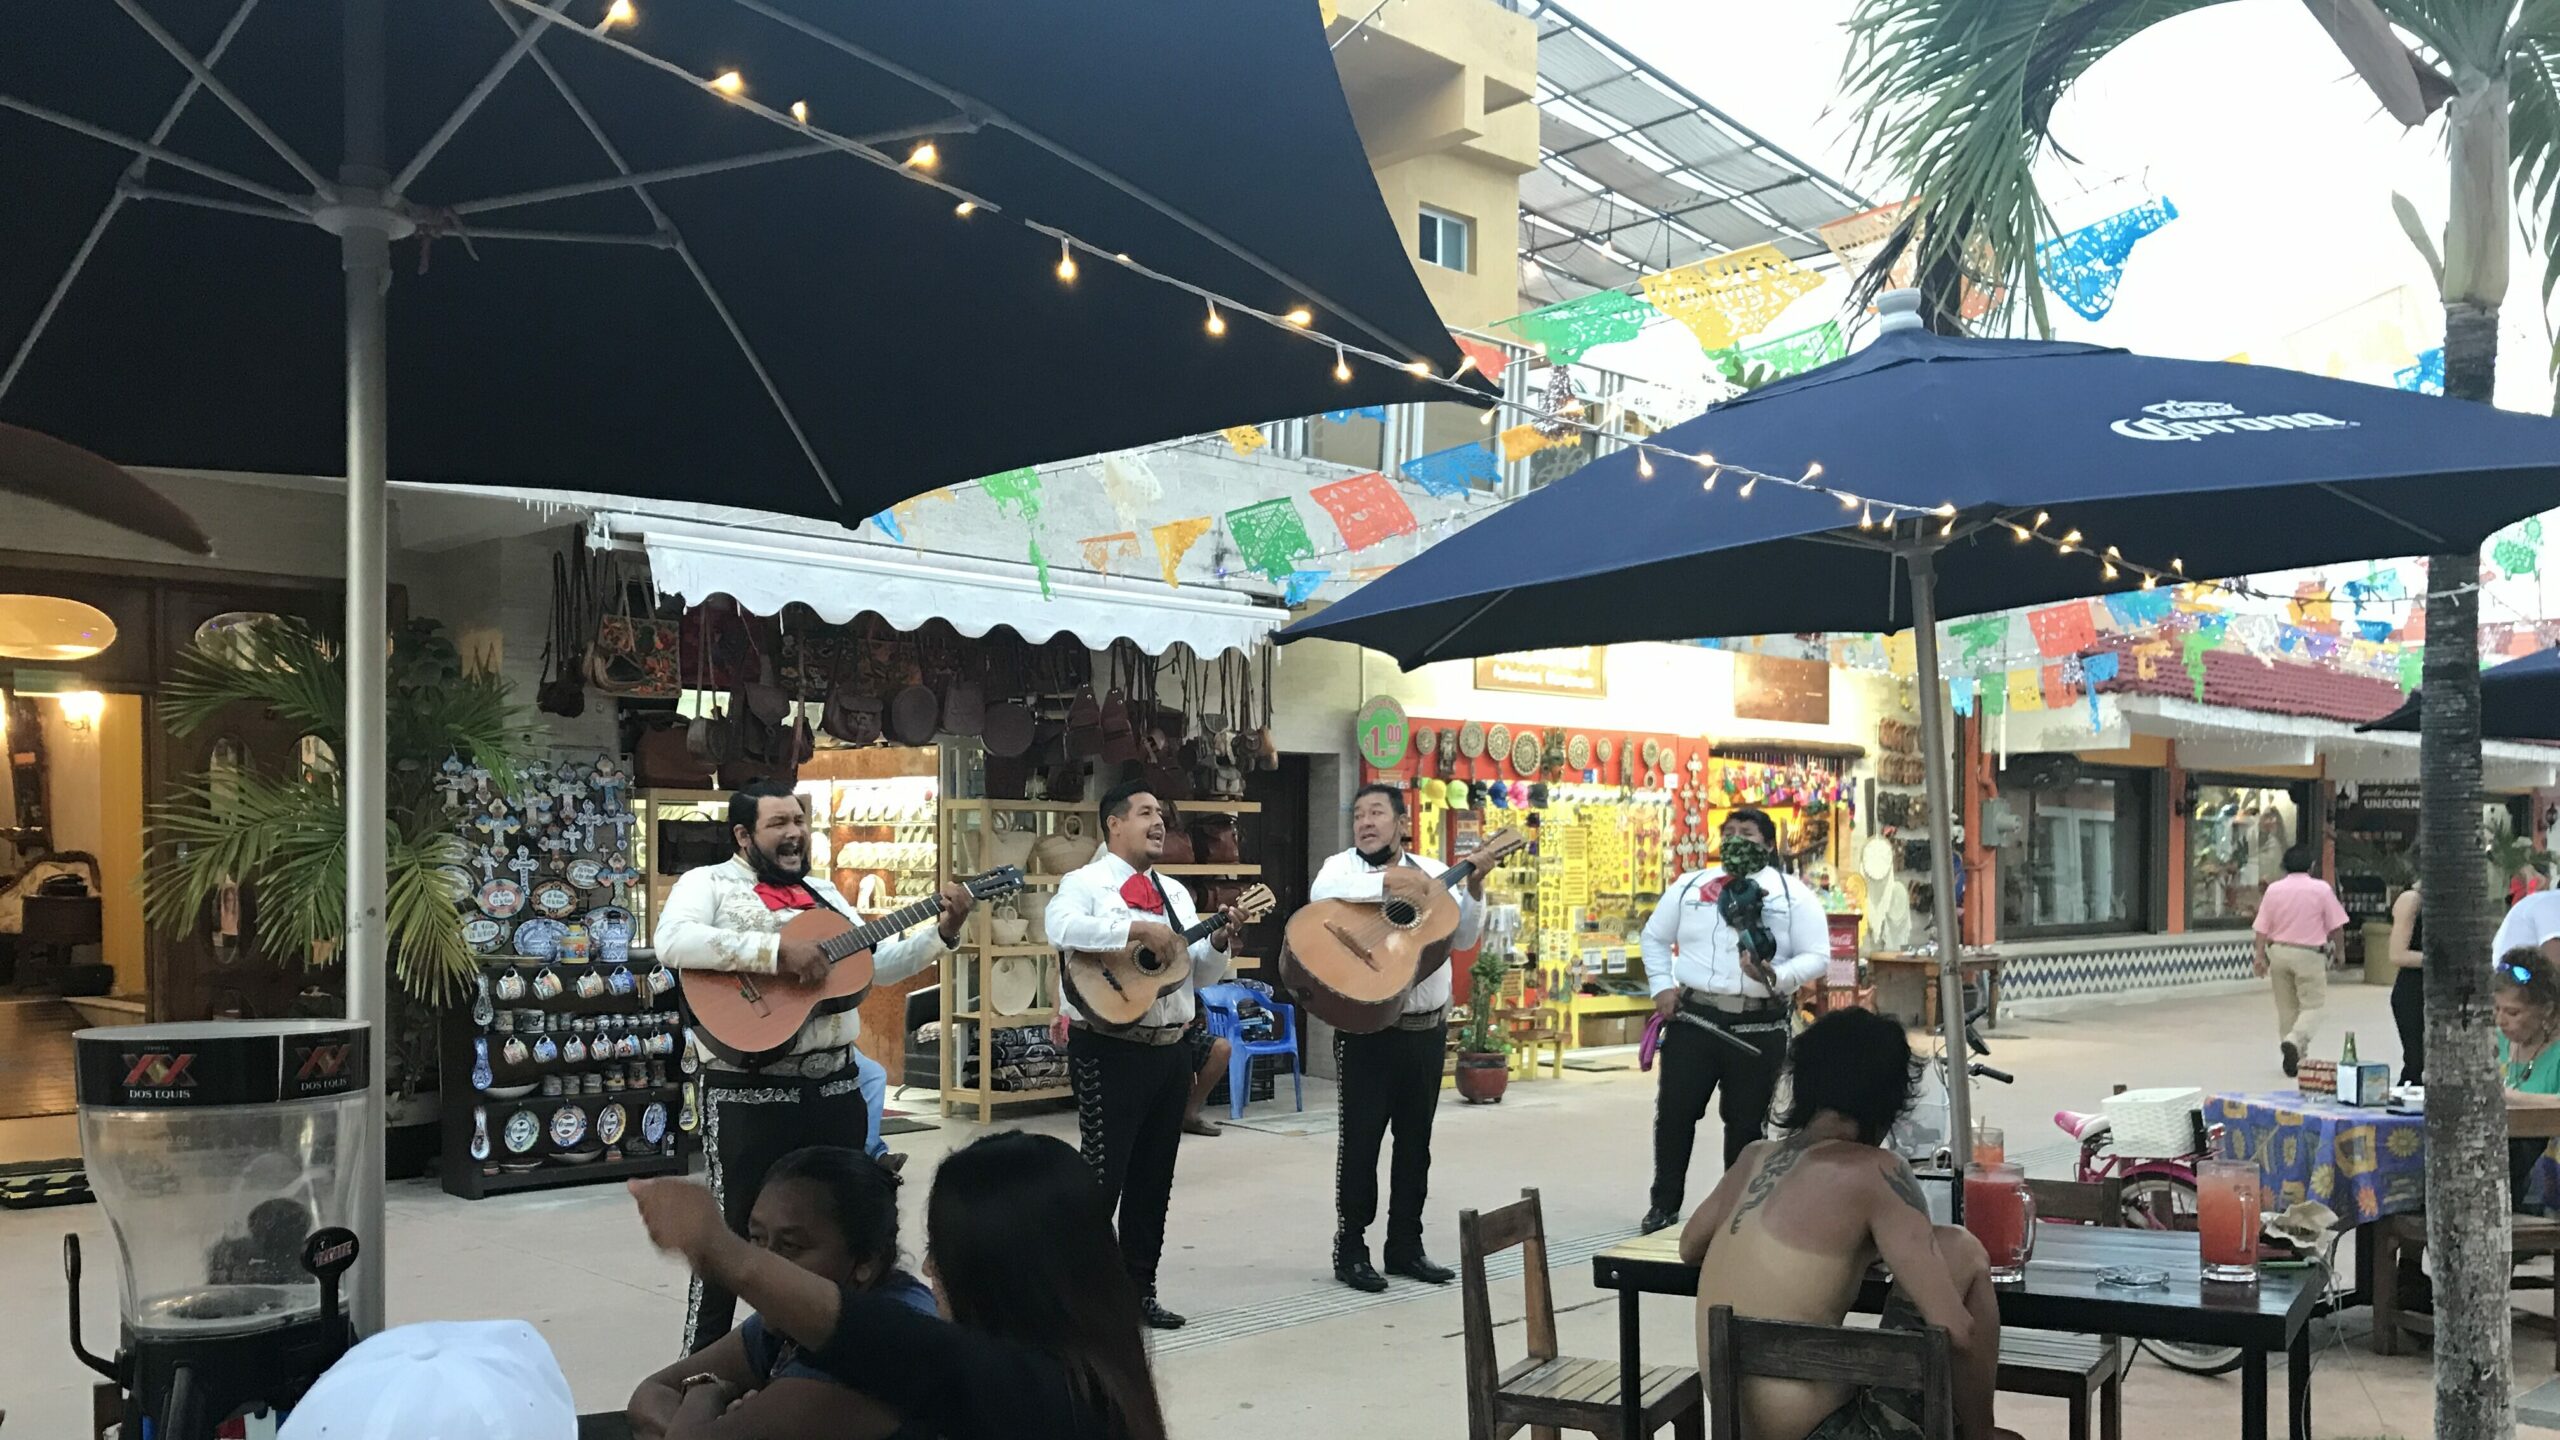 Mariachi band performs in the plaza Parque Benito Juarez in Cozumel.